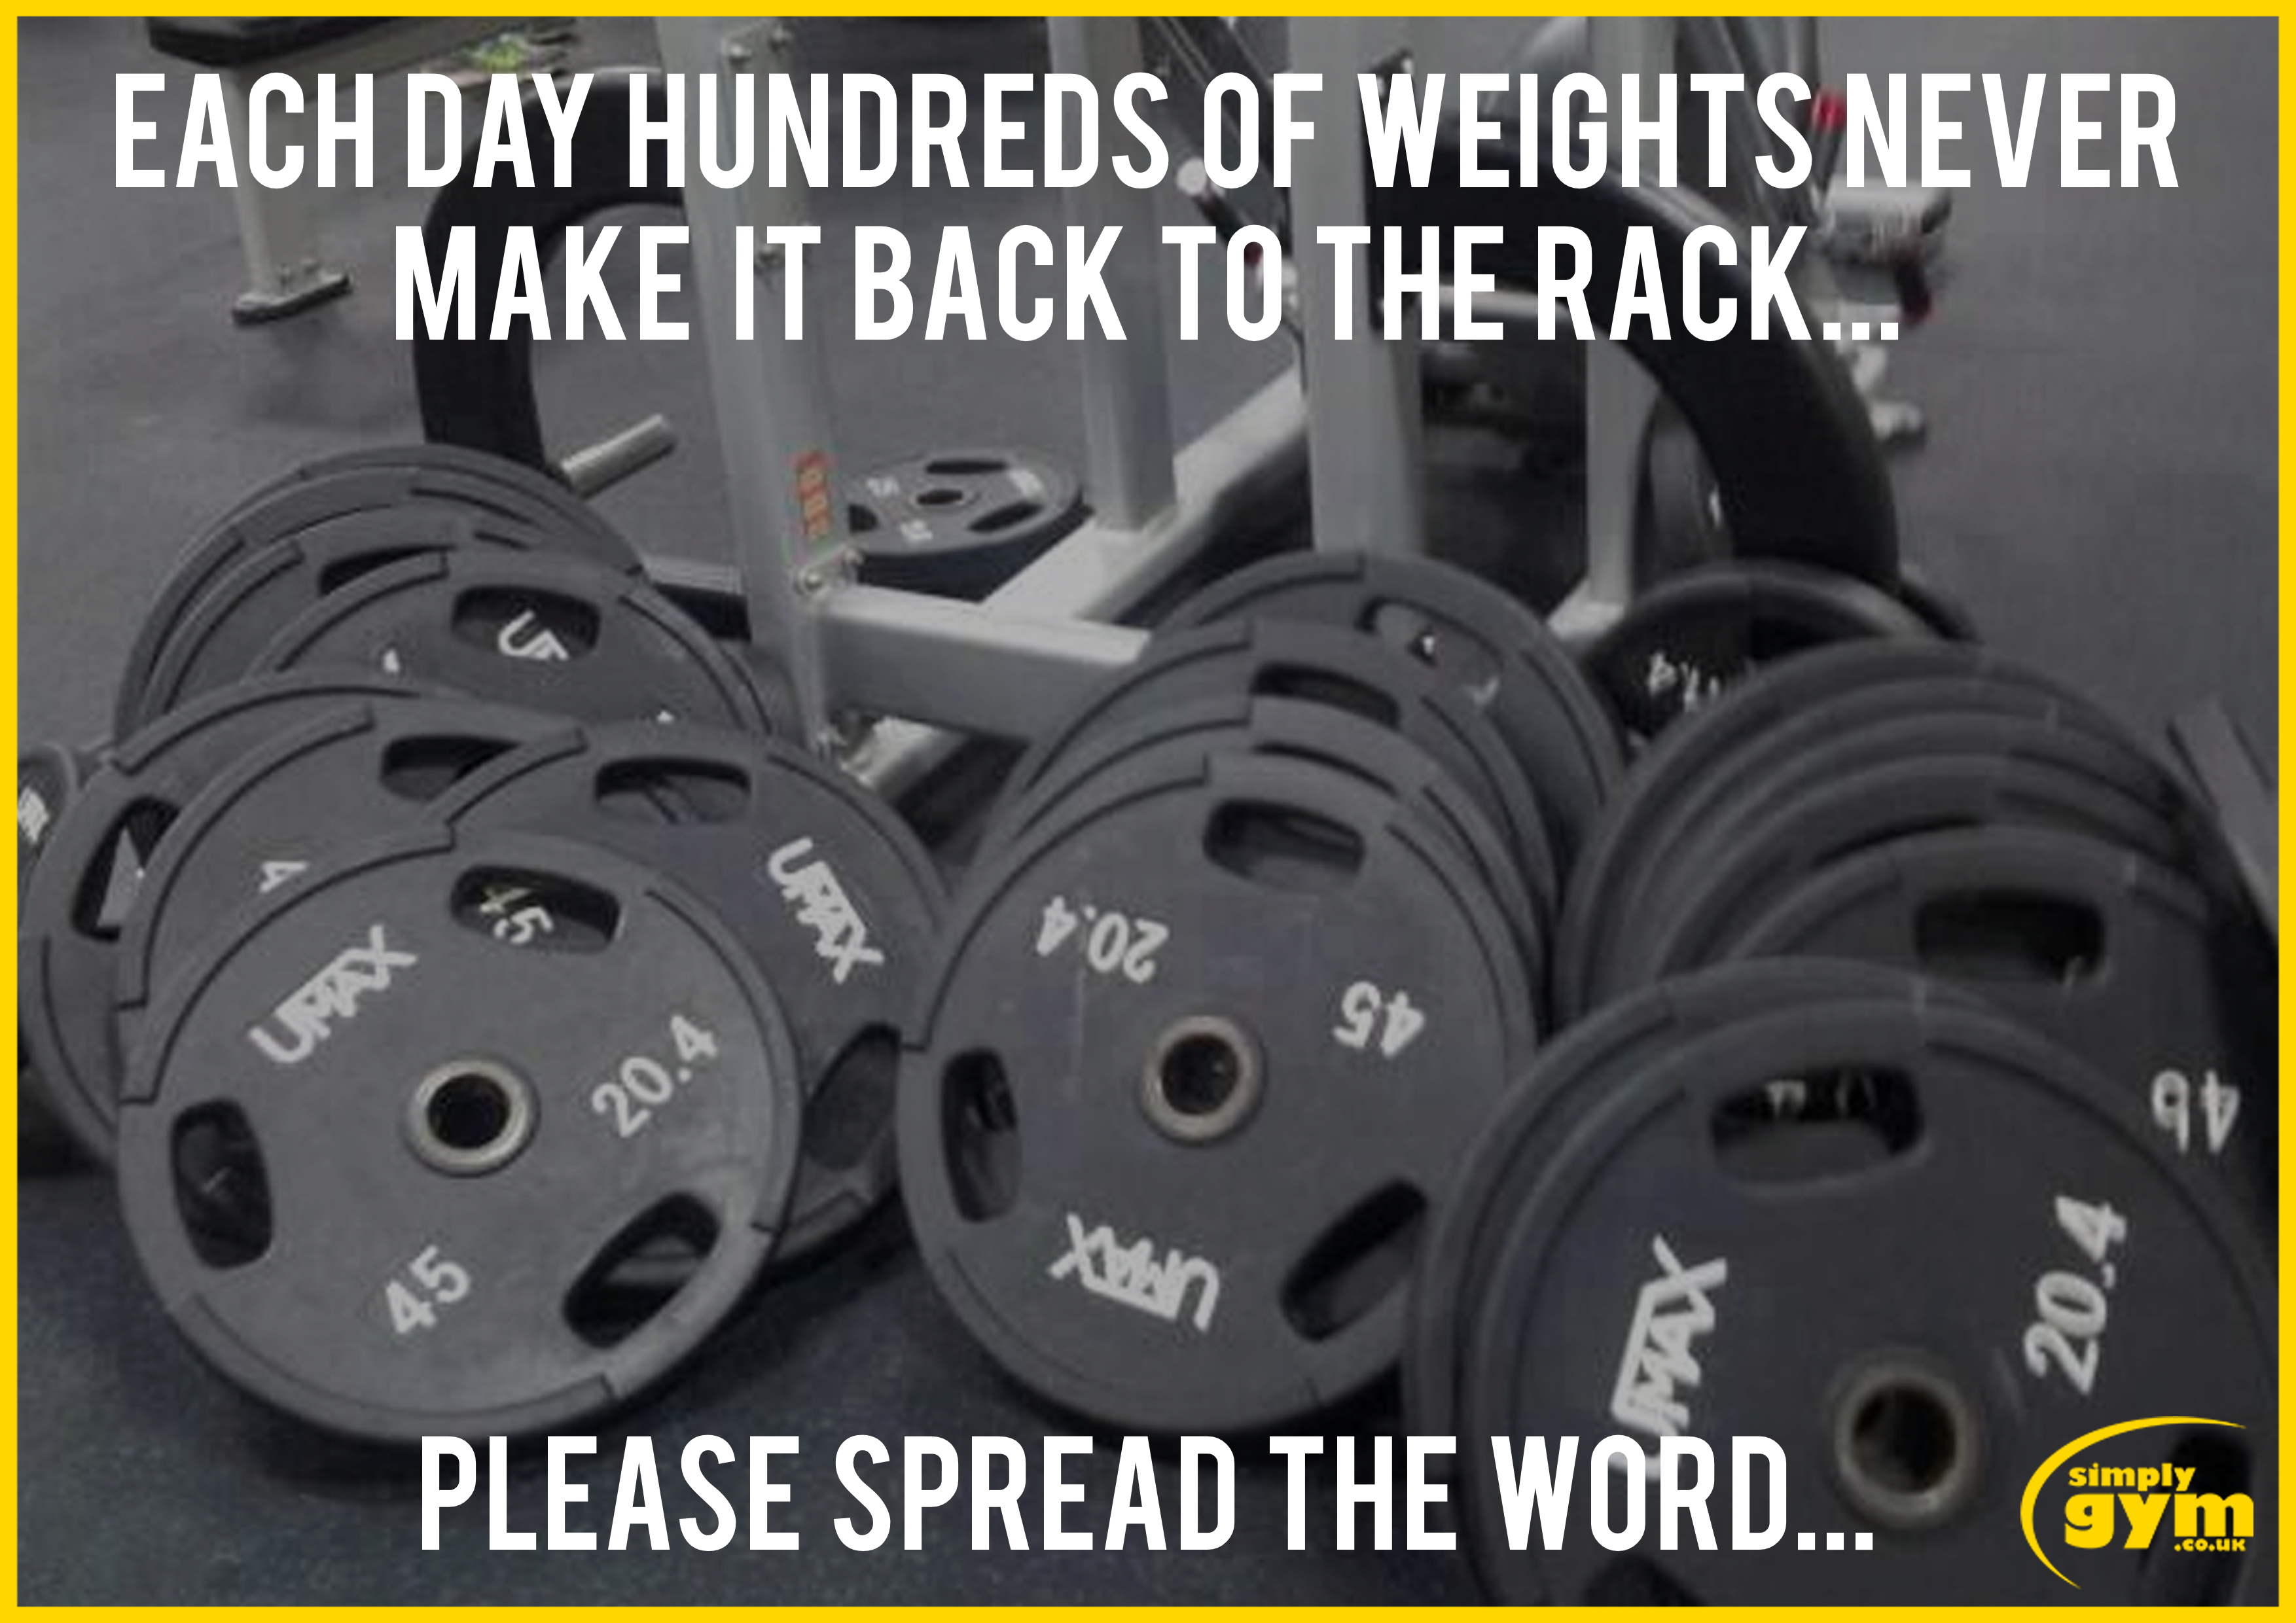 plain-weights-poster